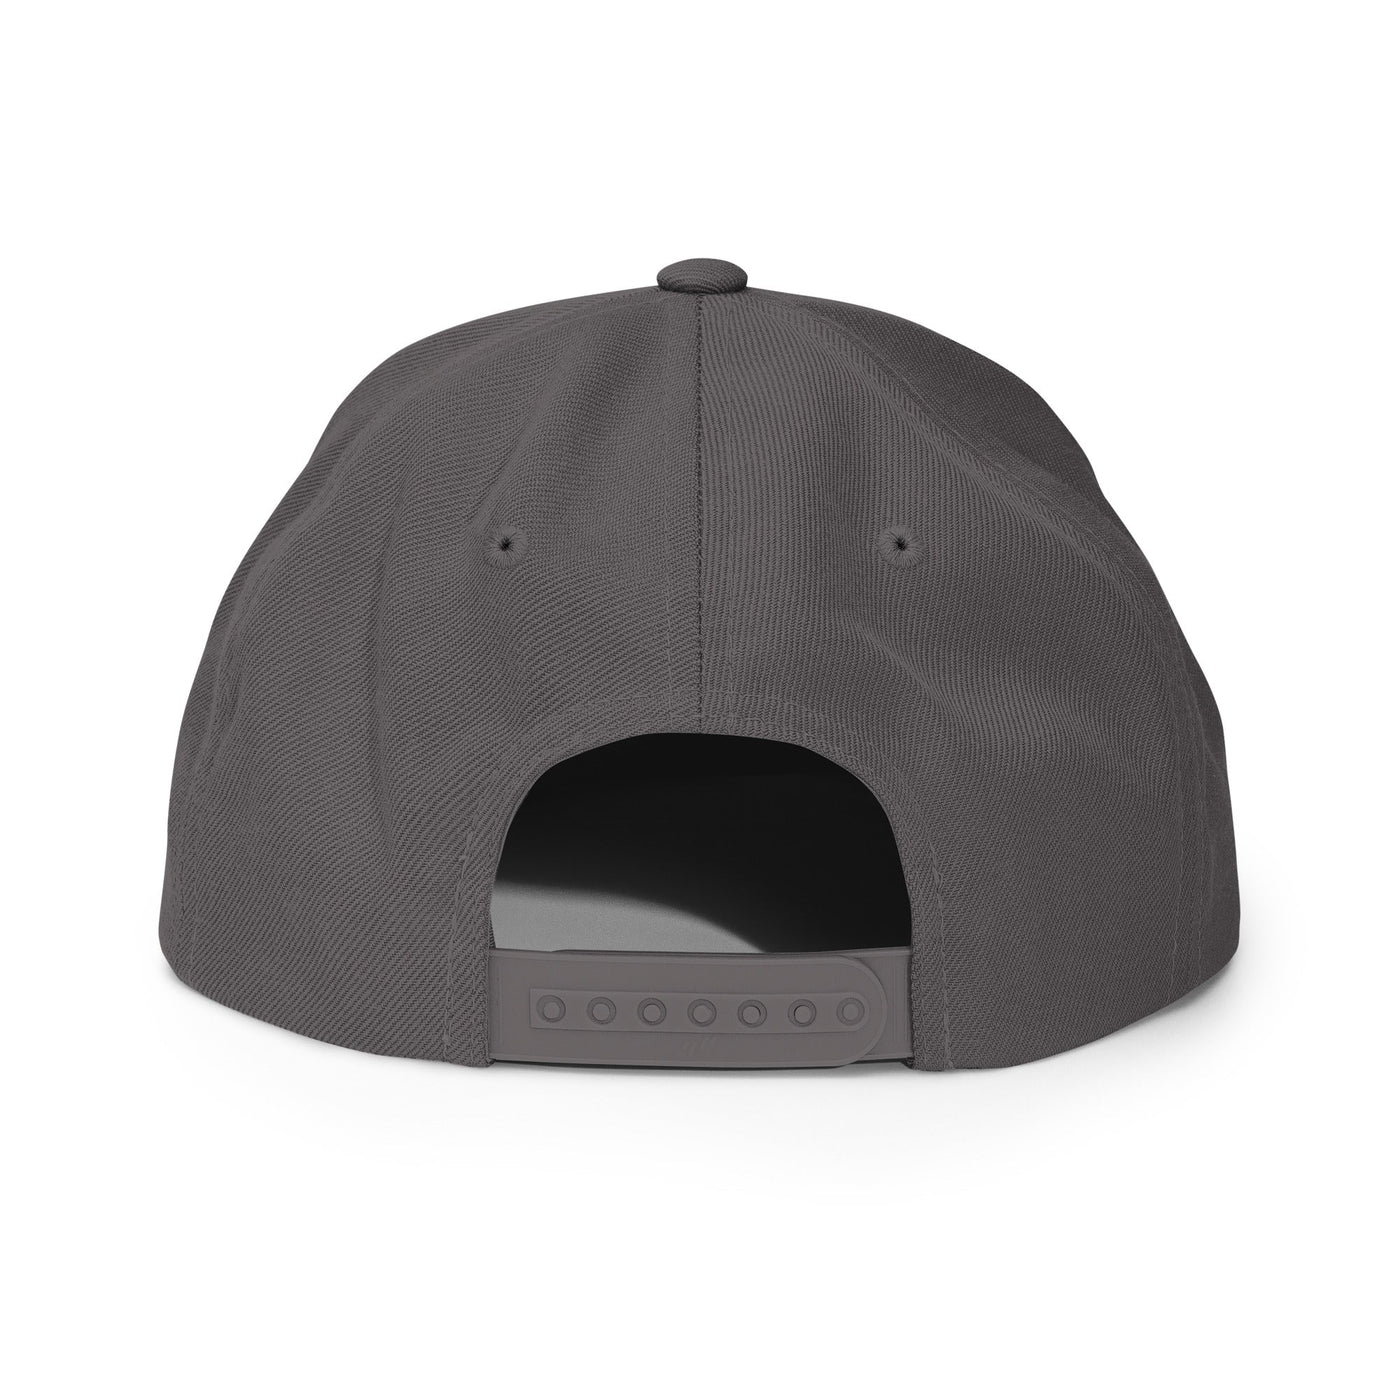 Cappuccino. Snapback Hat - Dark Grey - - Just Another Cap Store